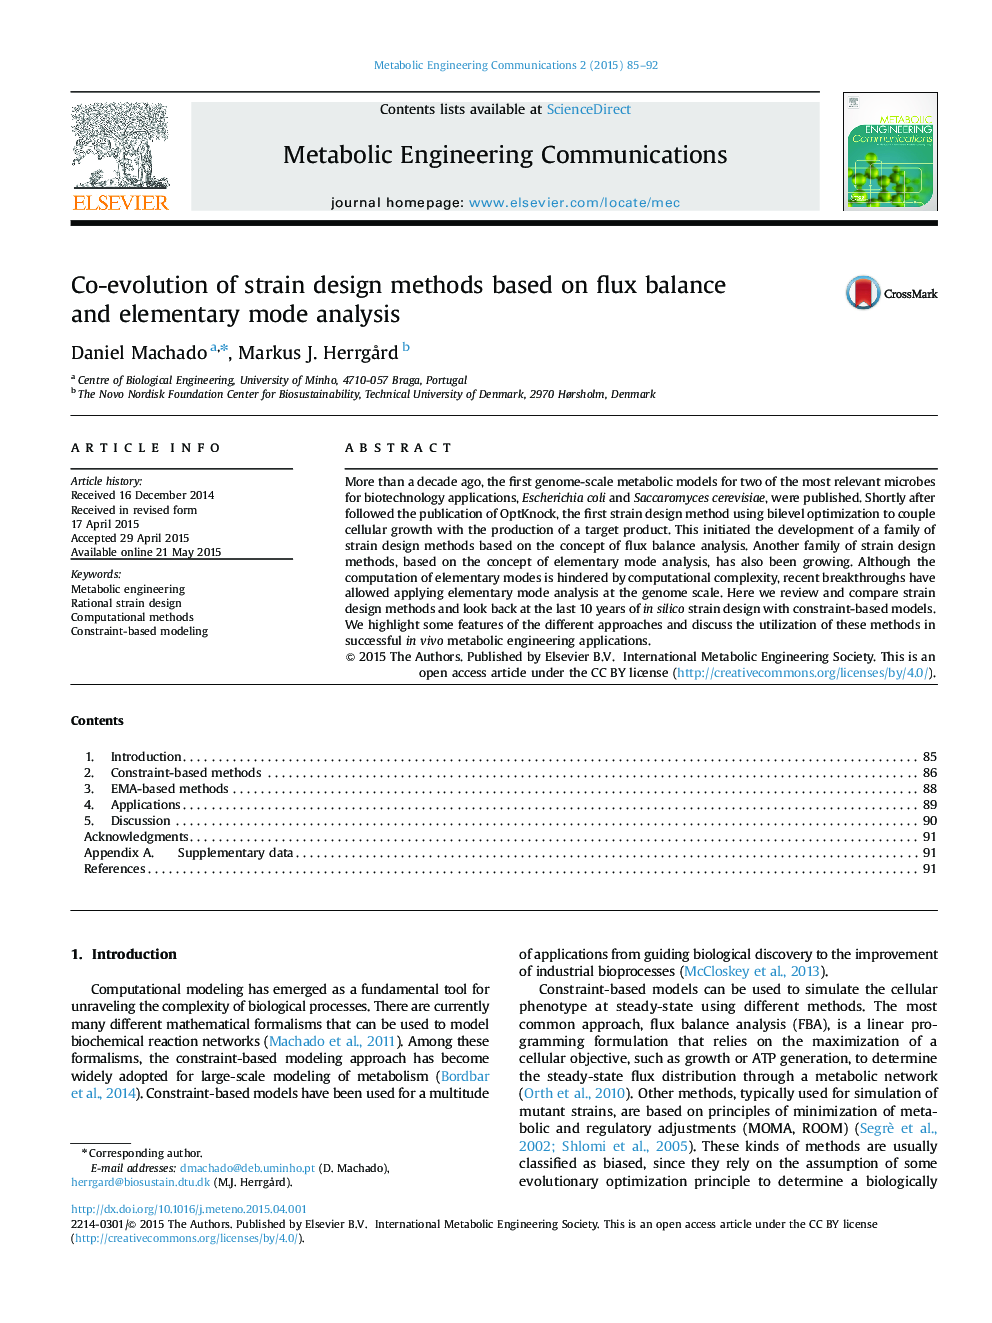 Co-evolution of strain design methods based on flux balance and elementary mode analysis